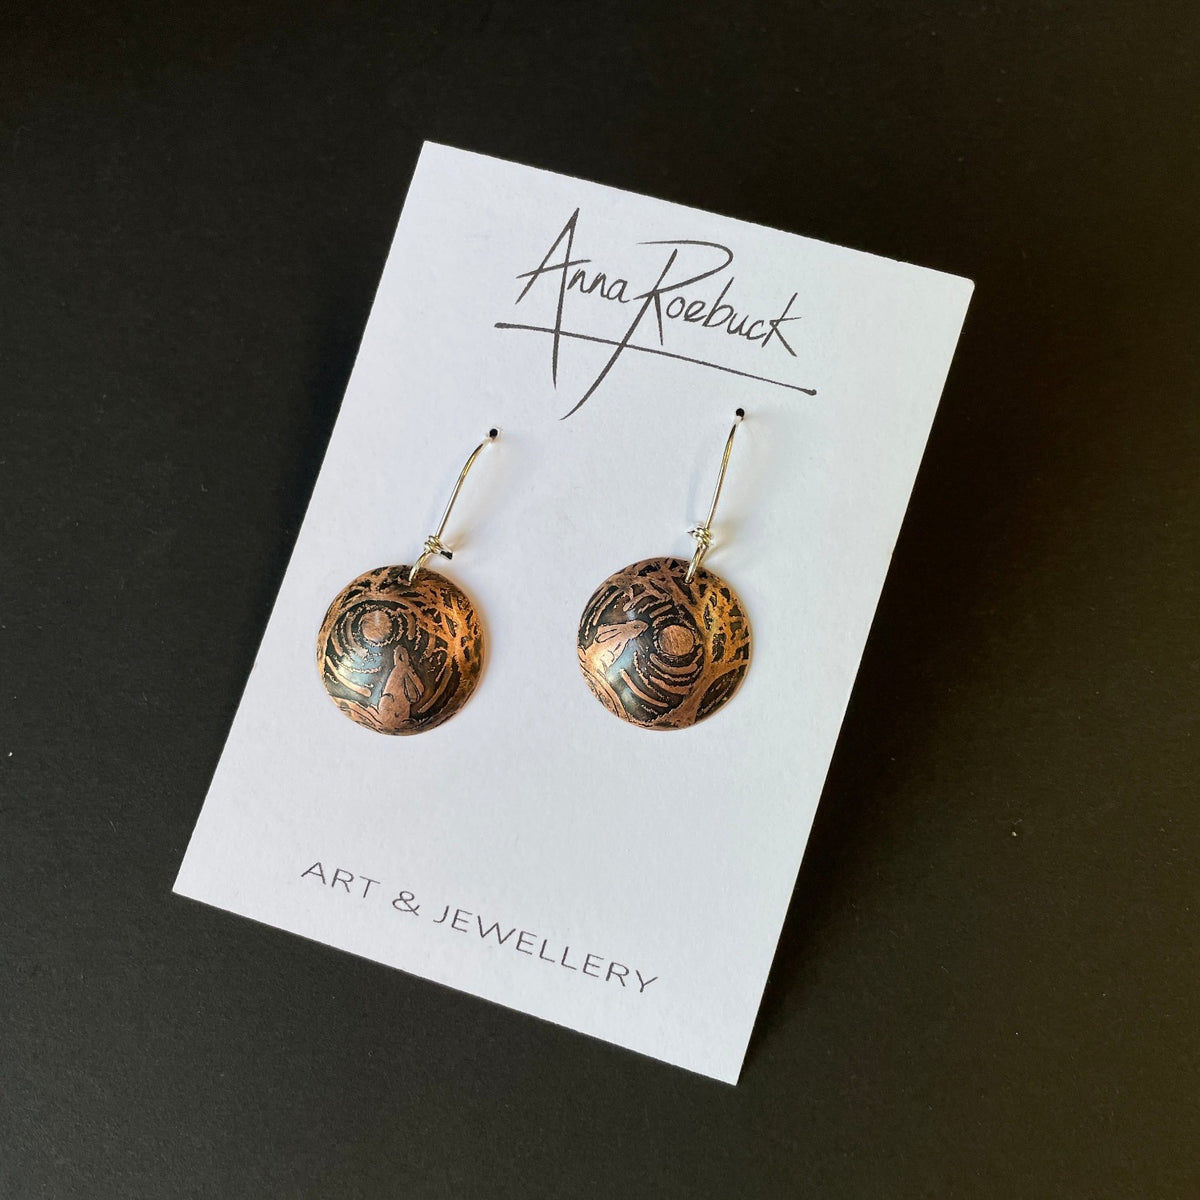 Moongazing copper earrings by Anna Roebuck